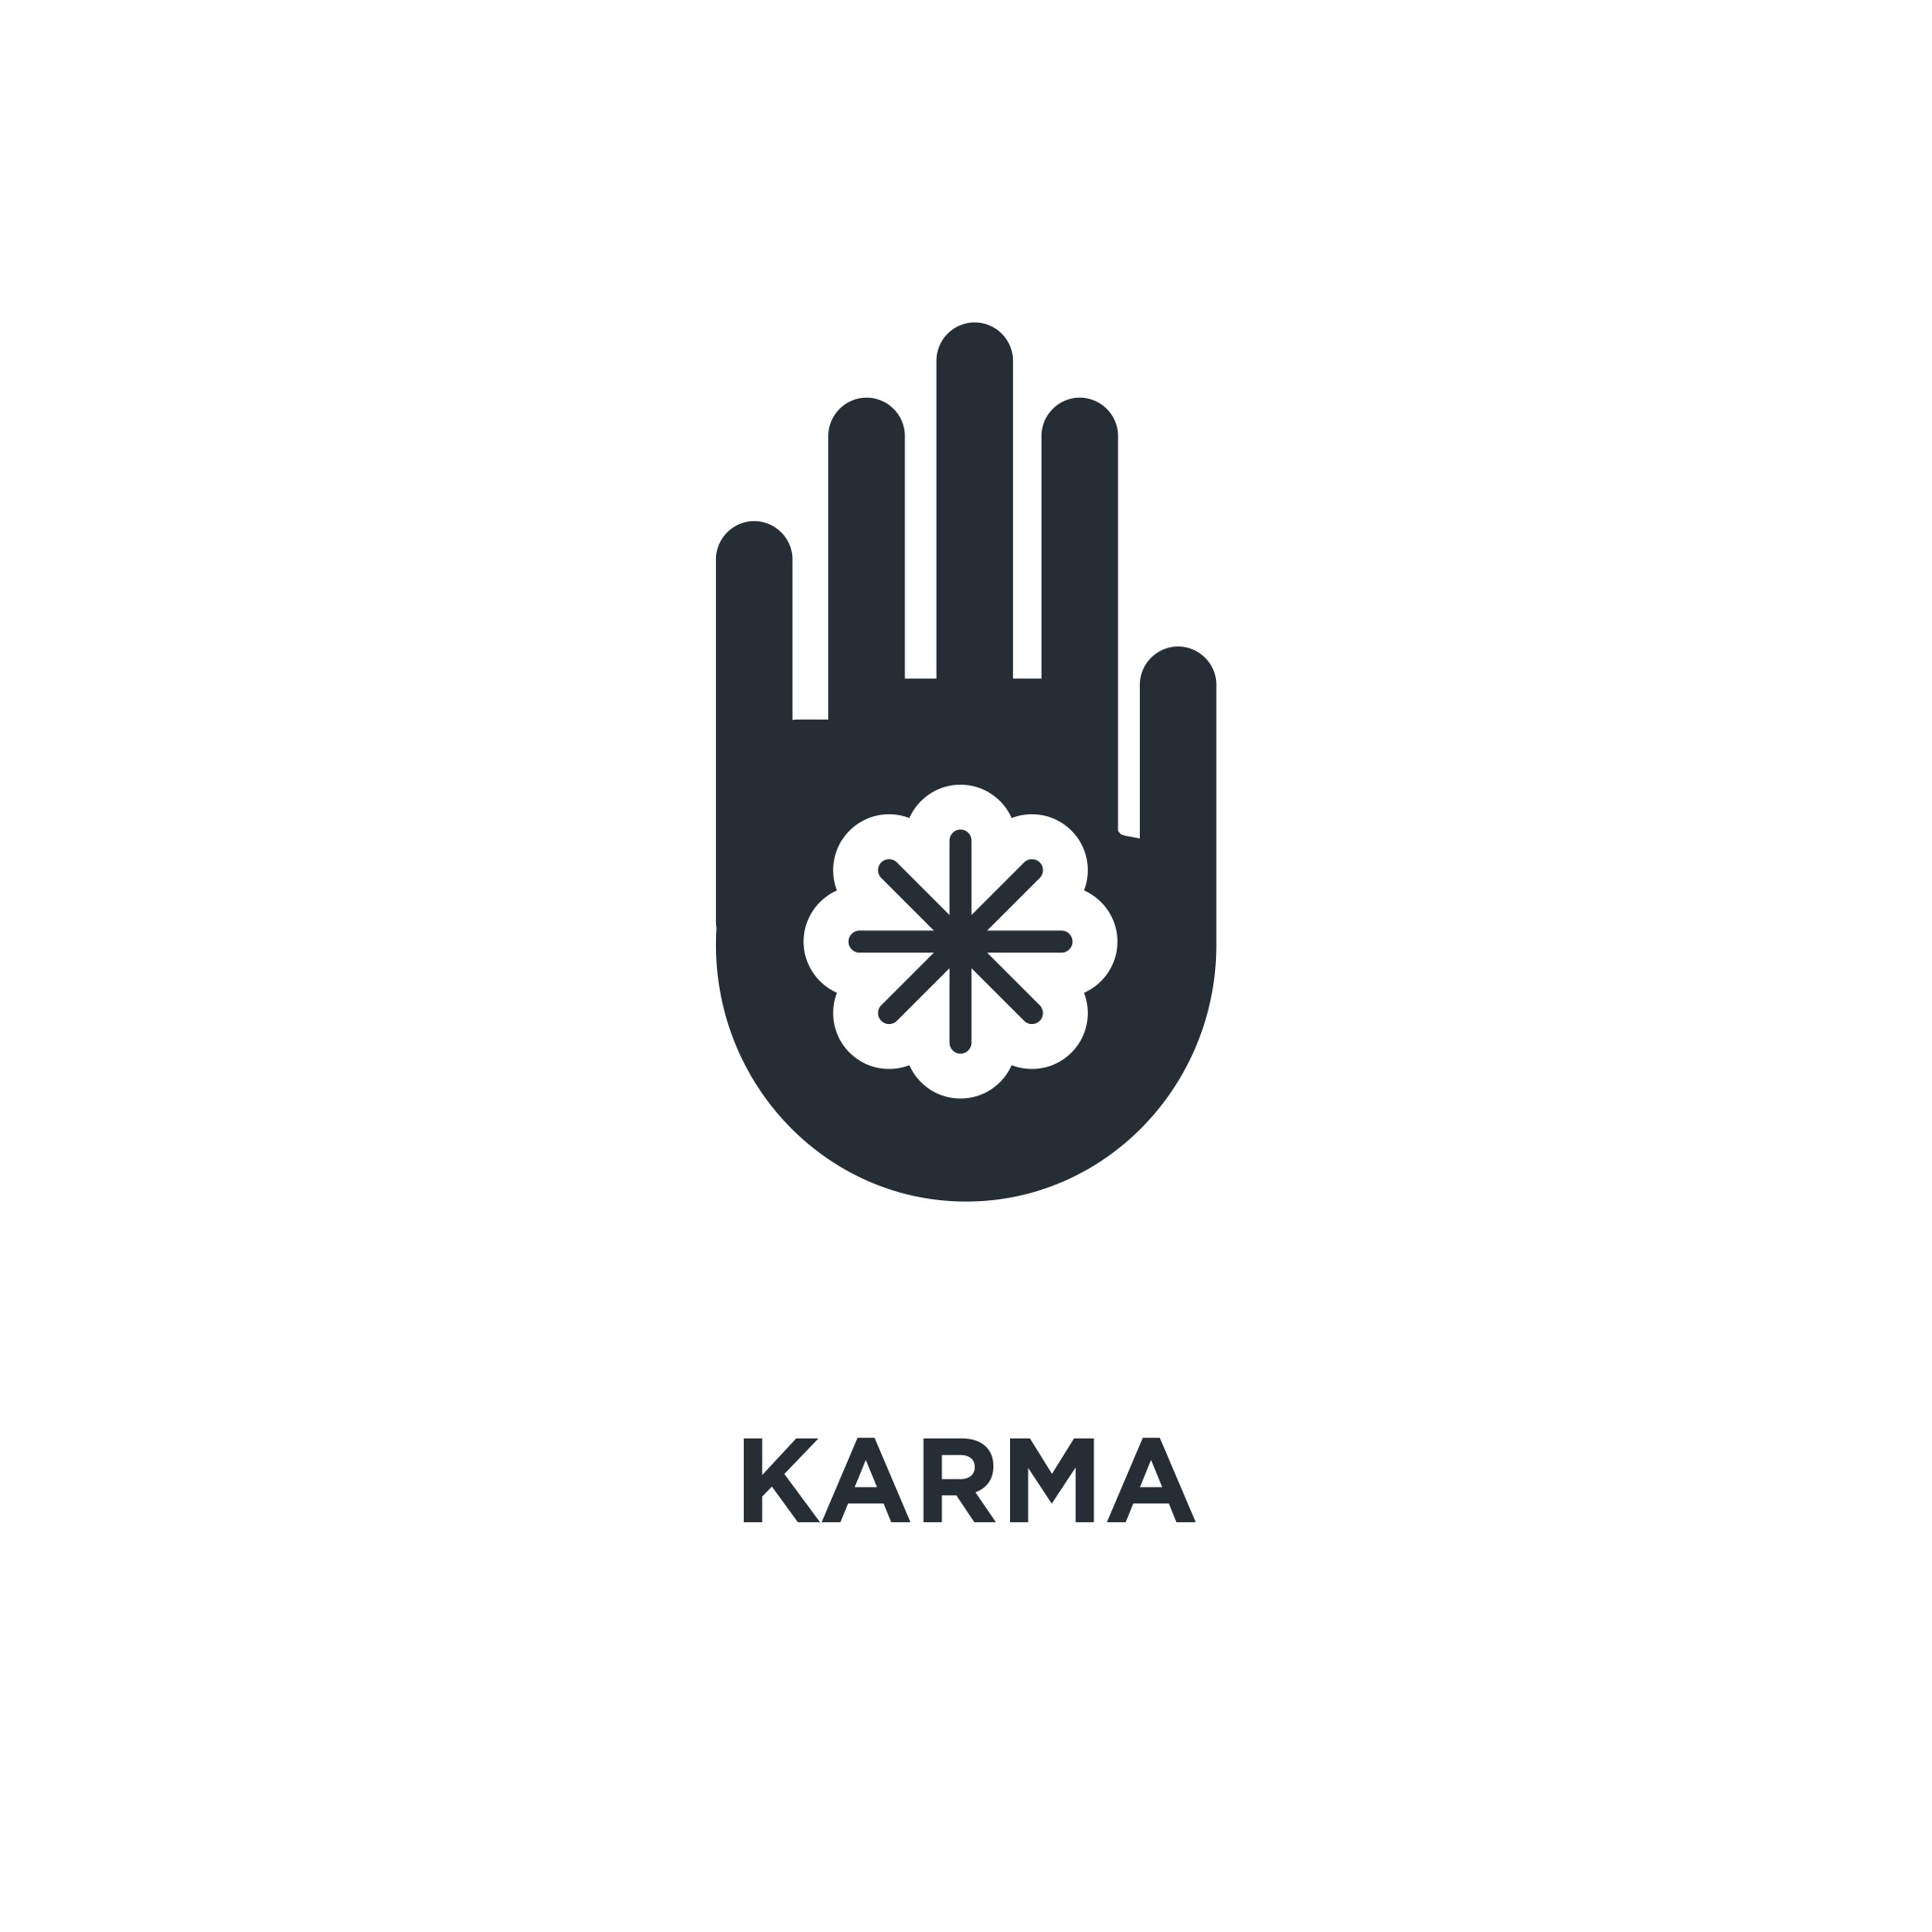 Logotipo del karma | Foto: Shutterstock